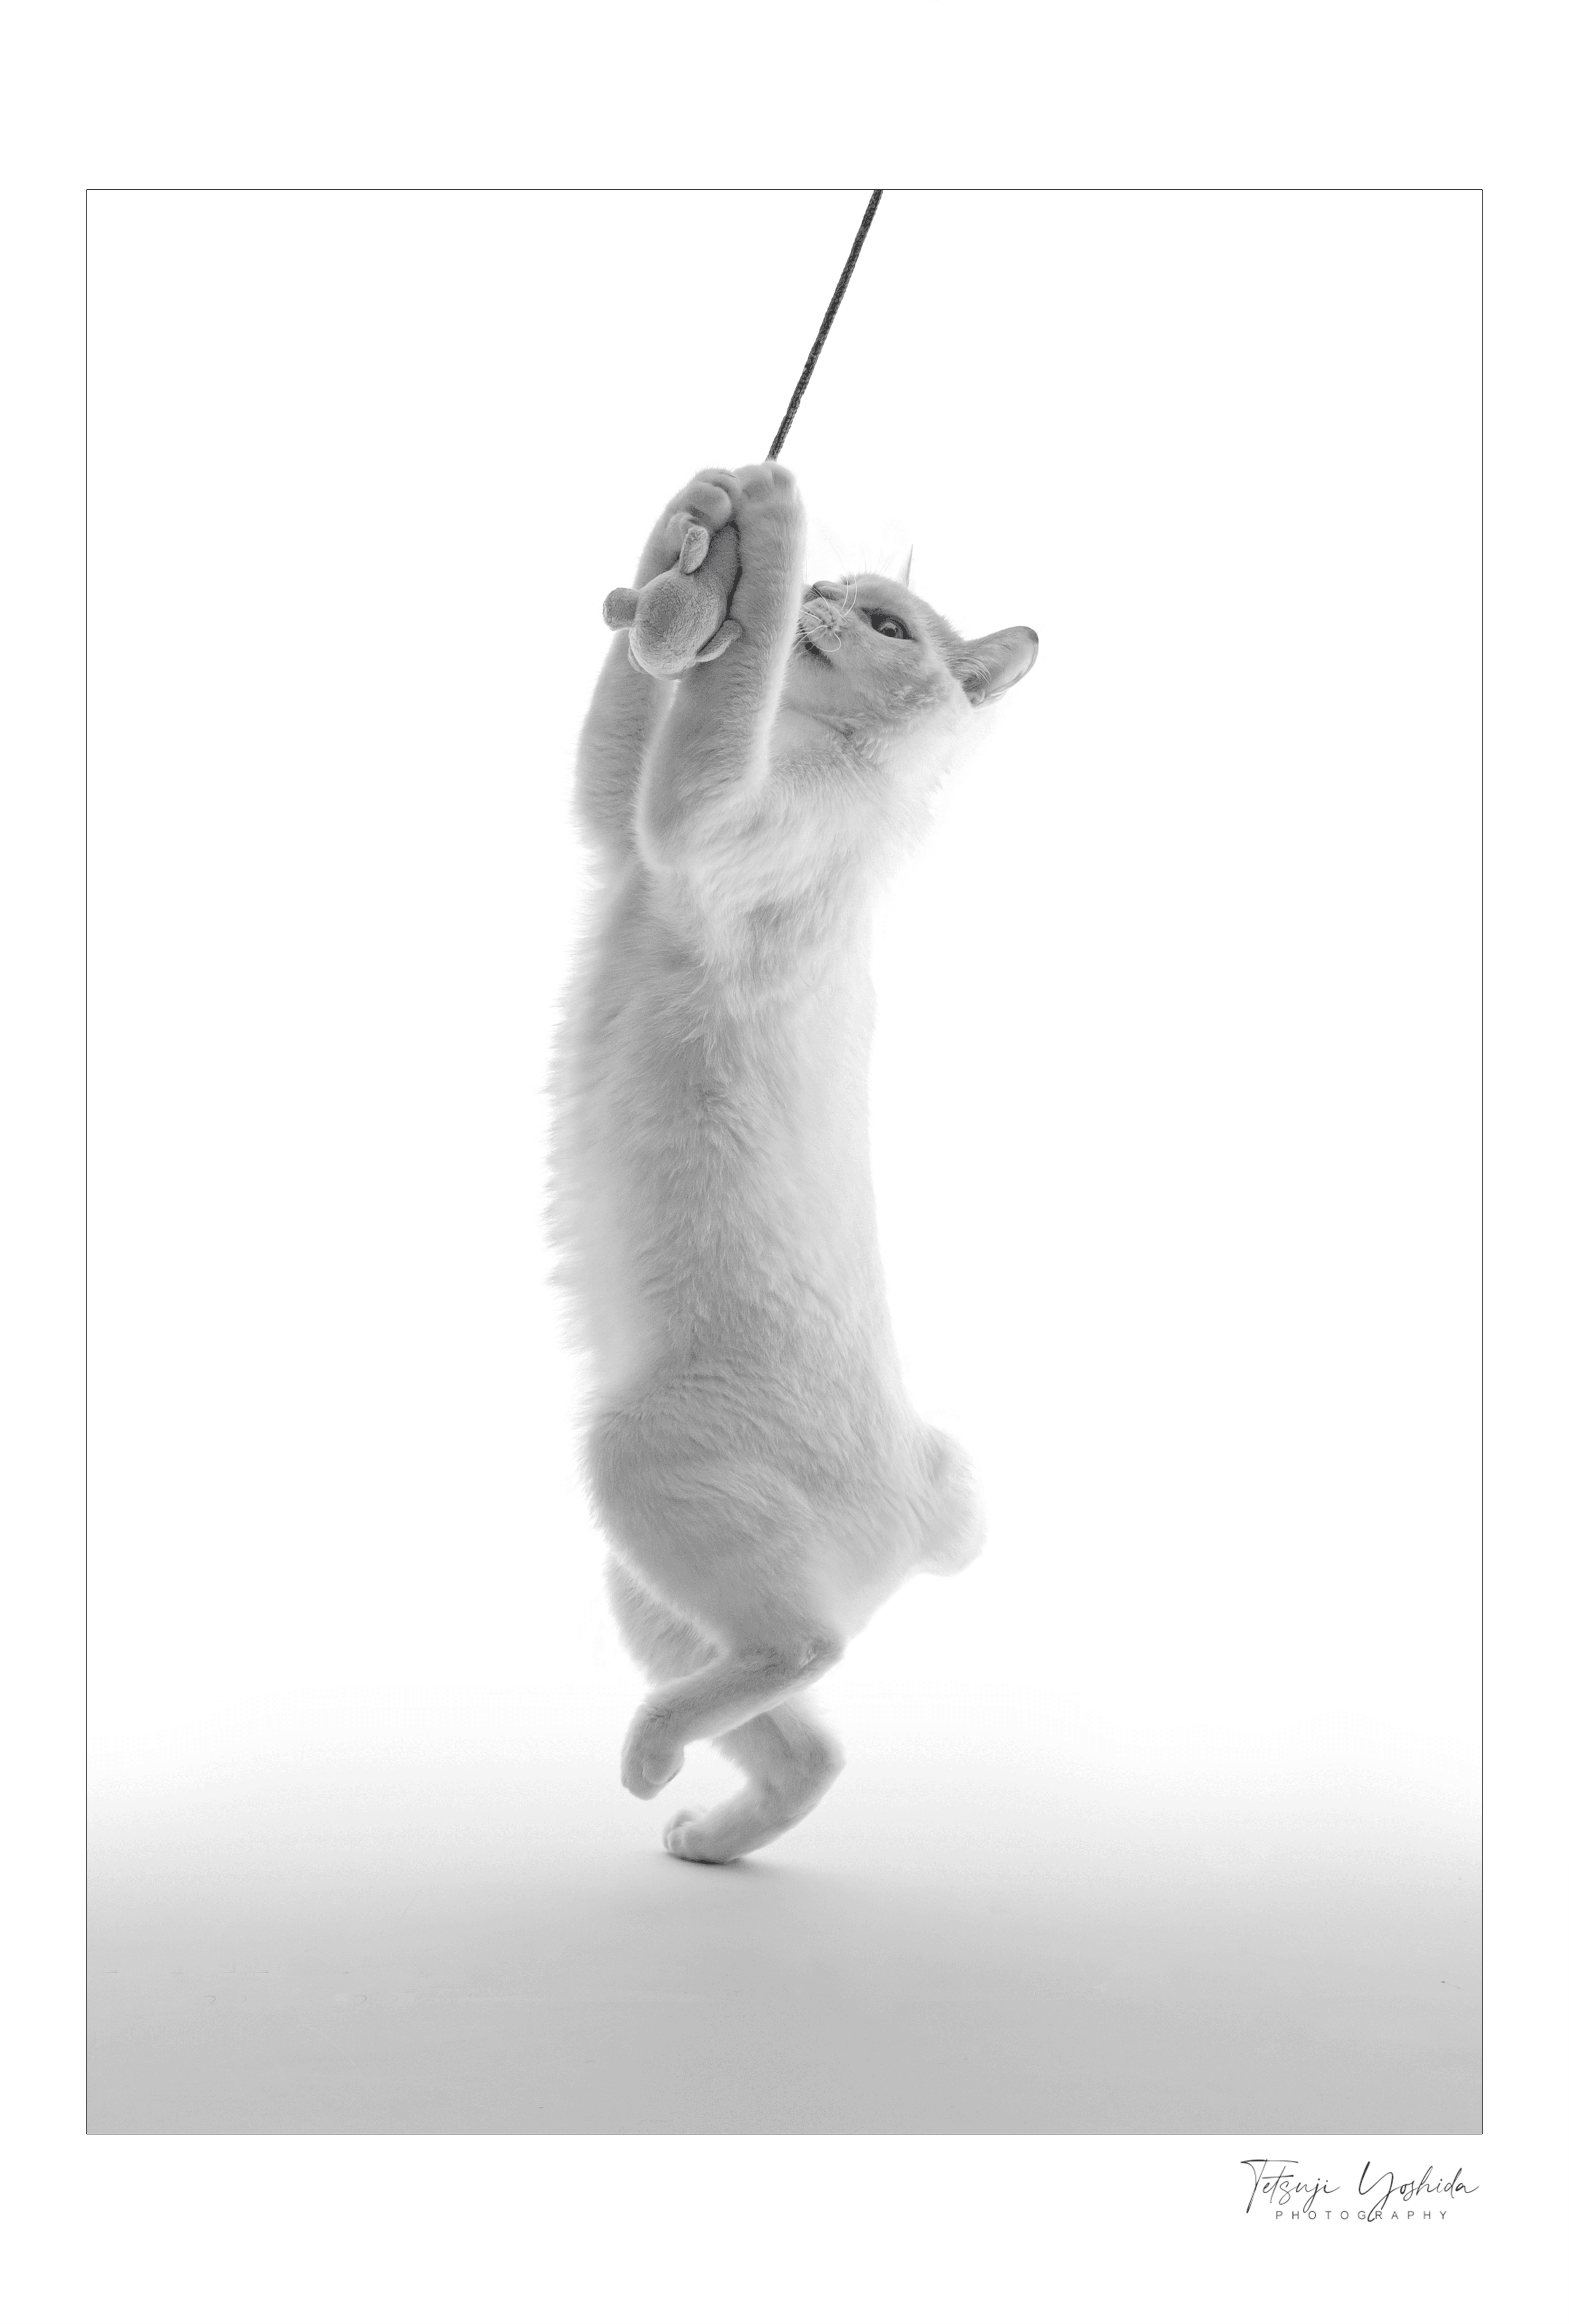 Teto the white cat "Just Catch"